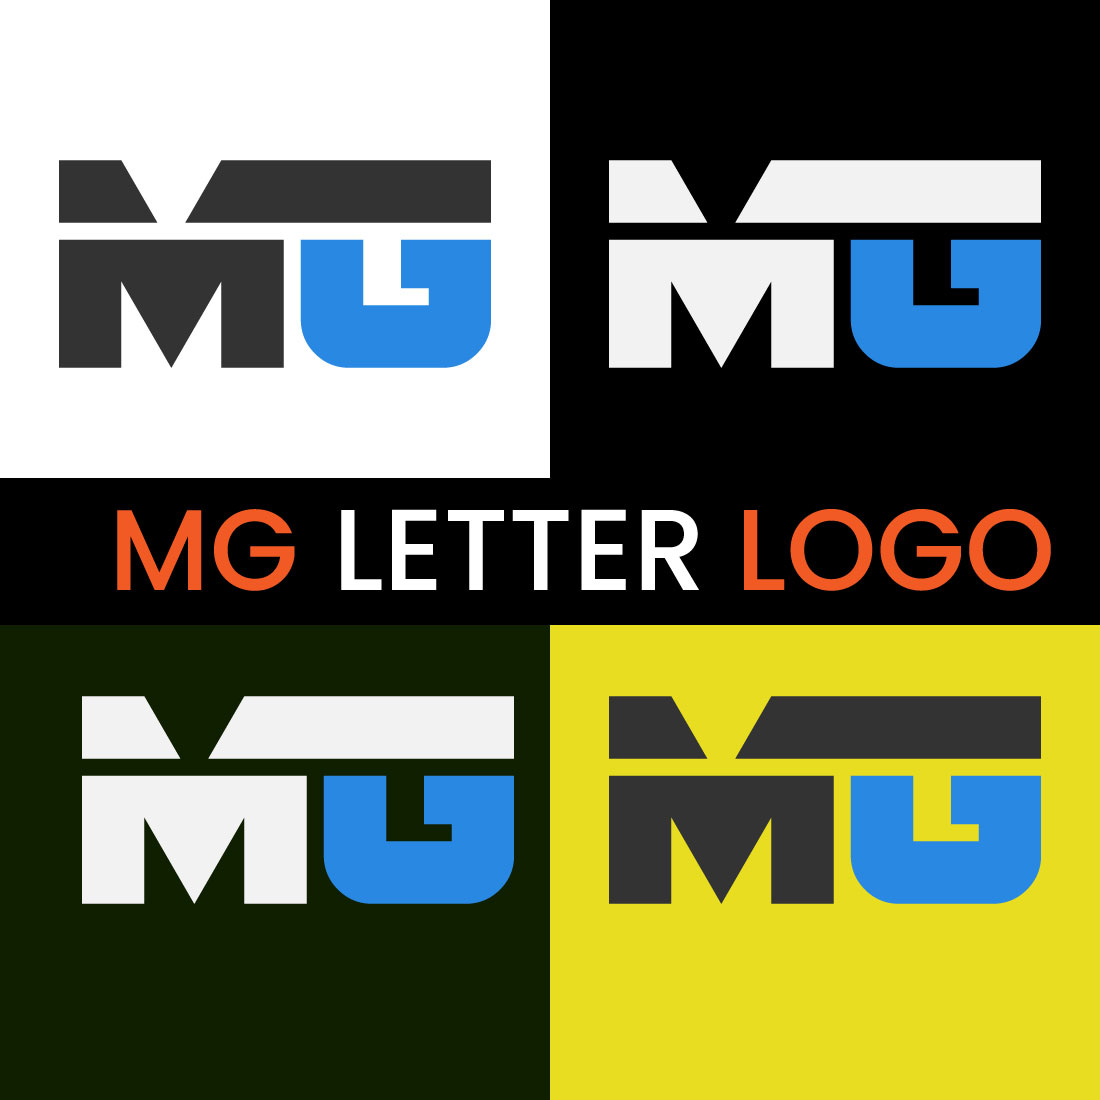 MG Letter Logo Design Template cover image.